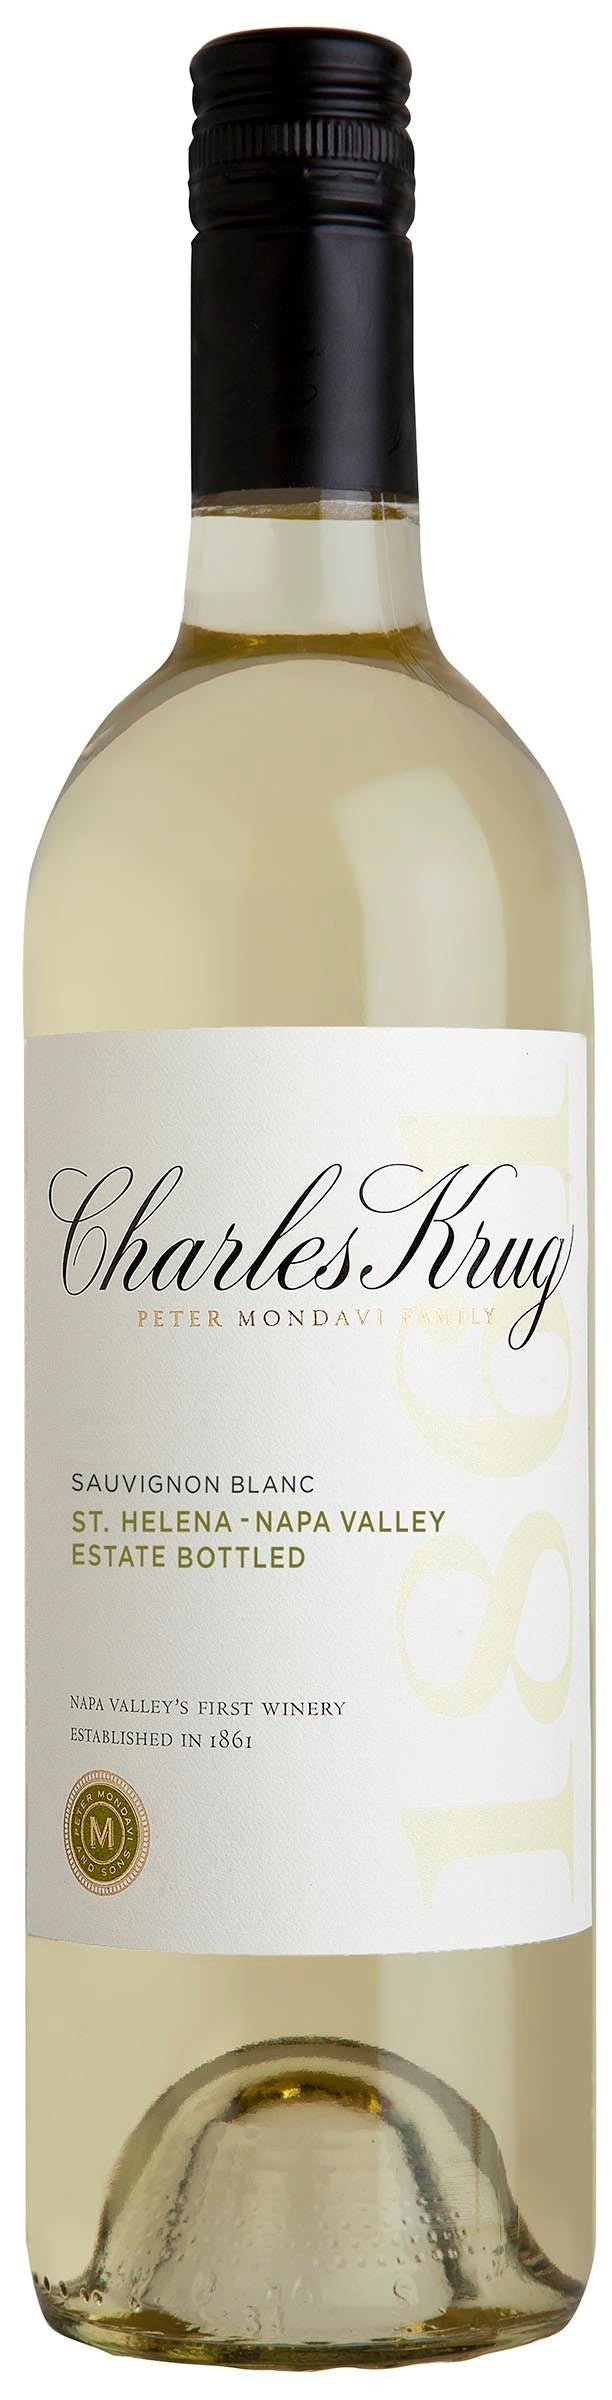 Charles Krug Sauvignon Blanc